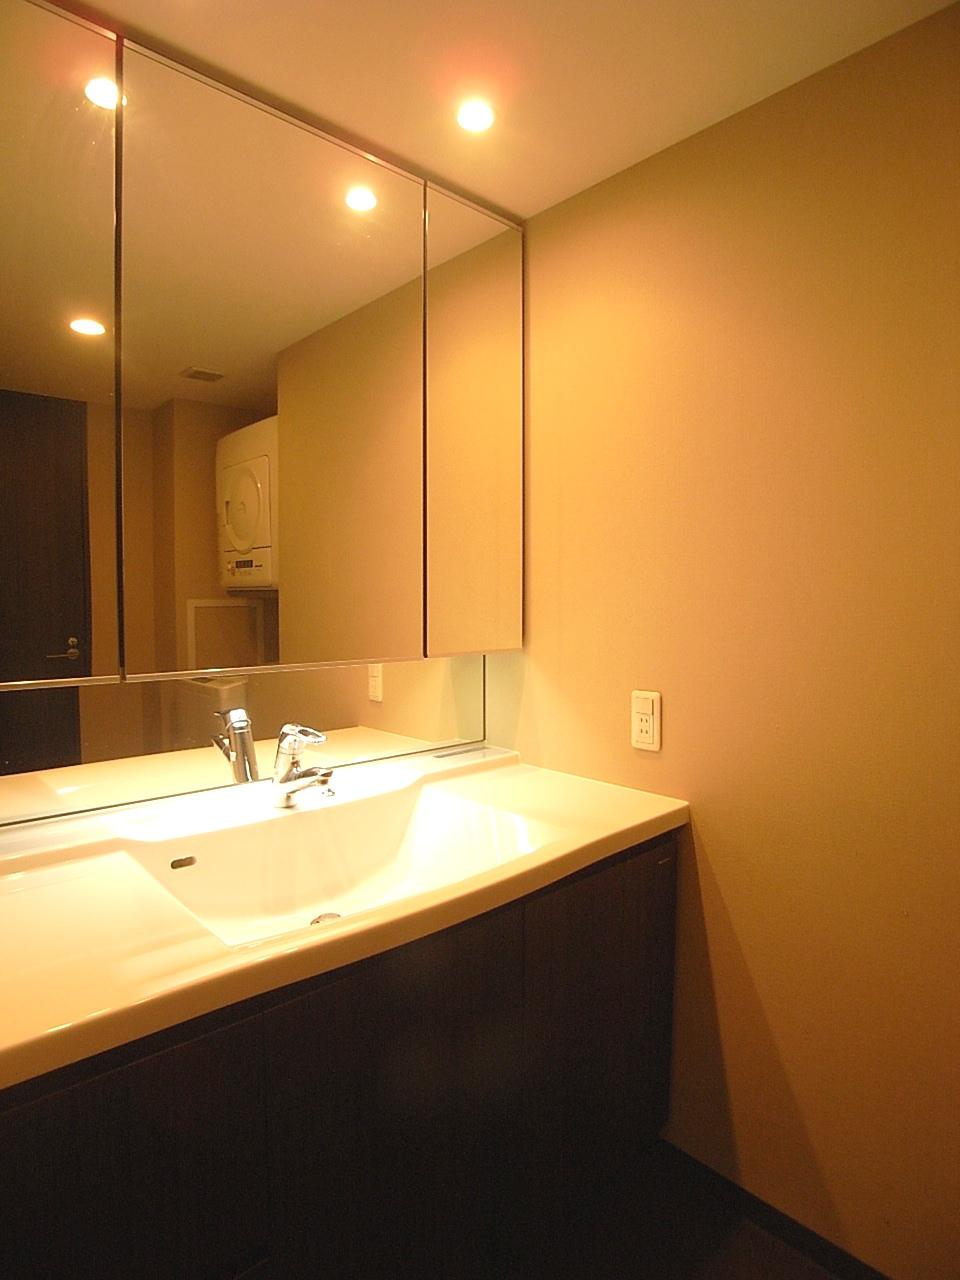 Wash basin, toilet. Three-sided mirror with vanity (November 2013) Shooting